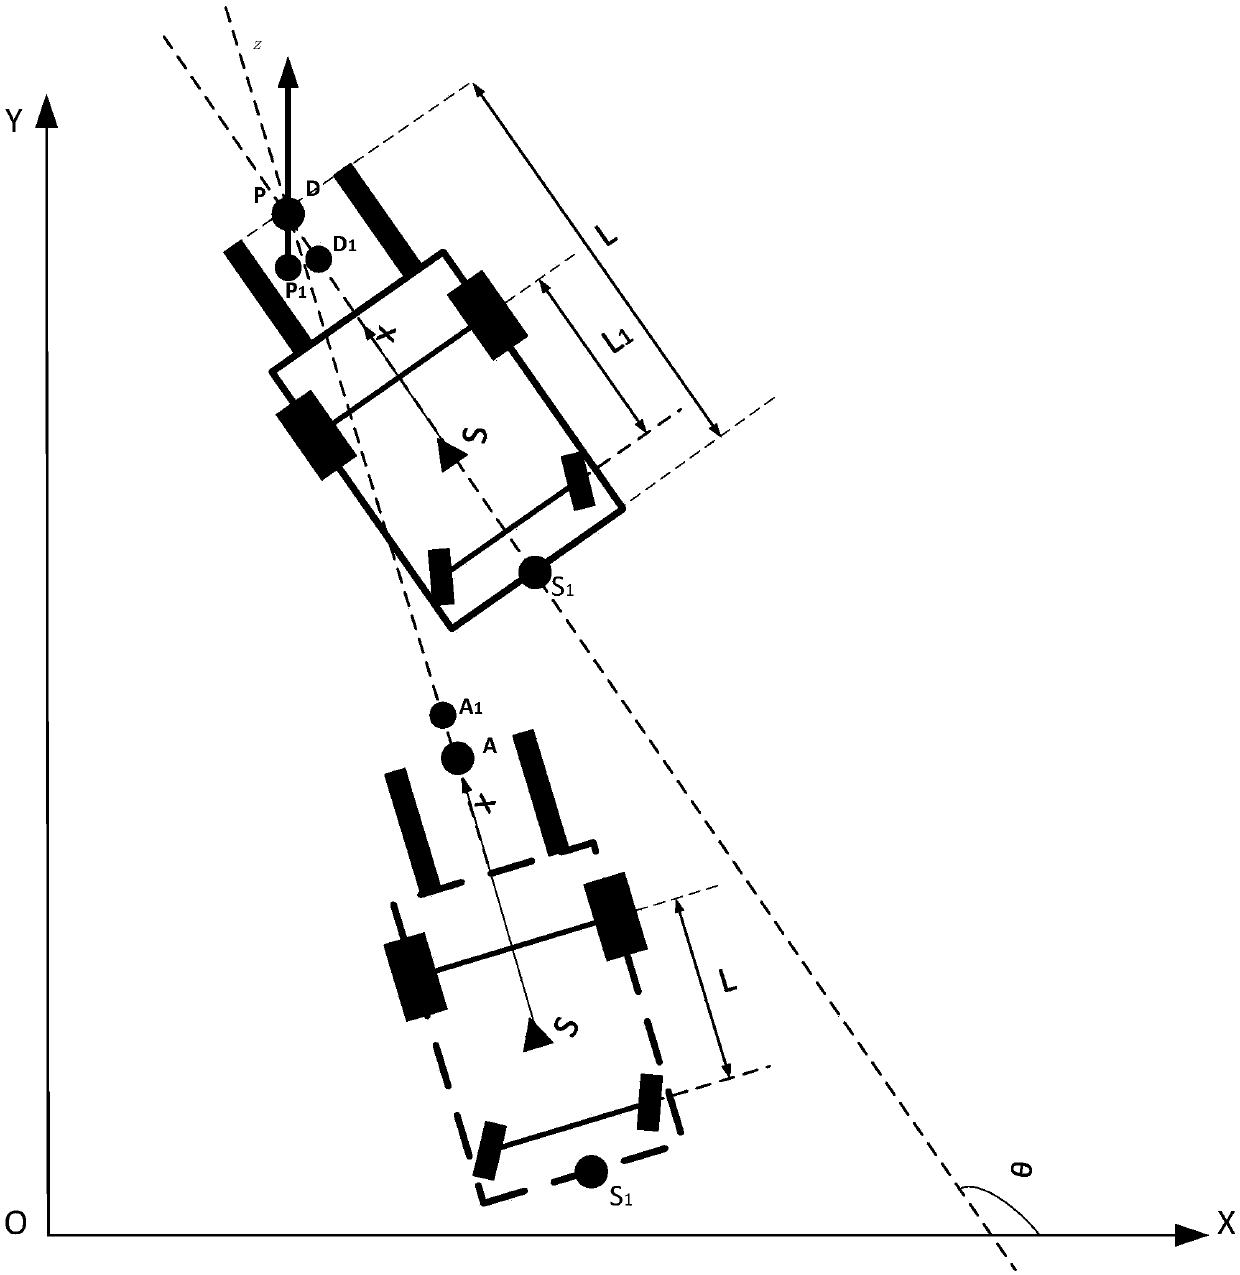 Posture adjustment path planning method of intelligent forklift